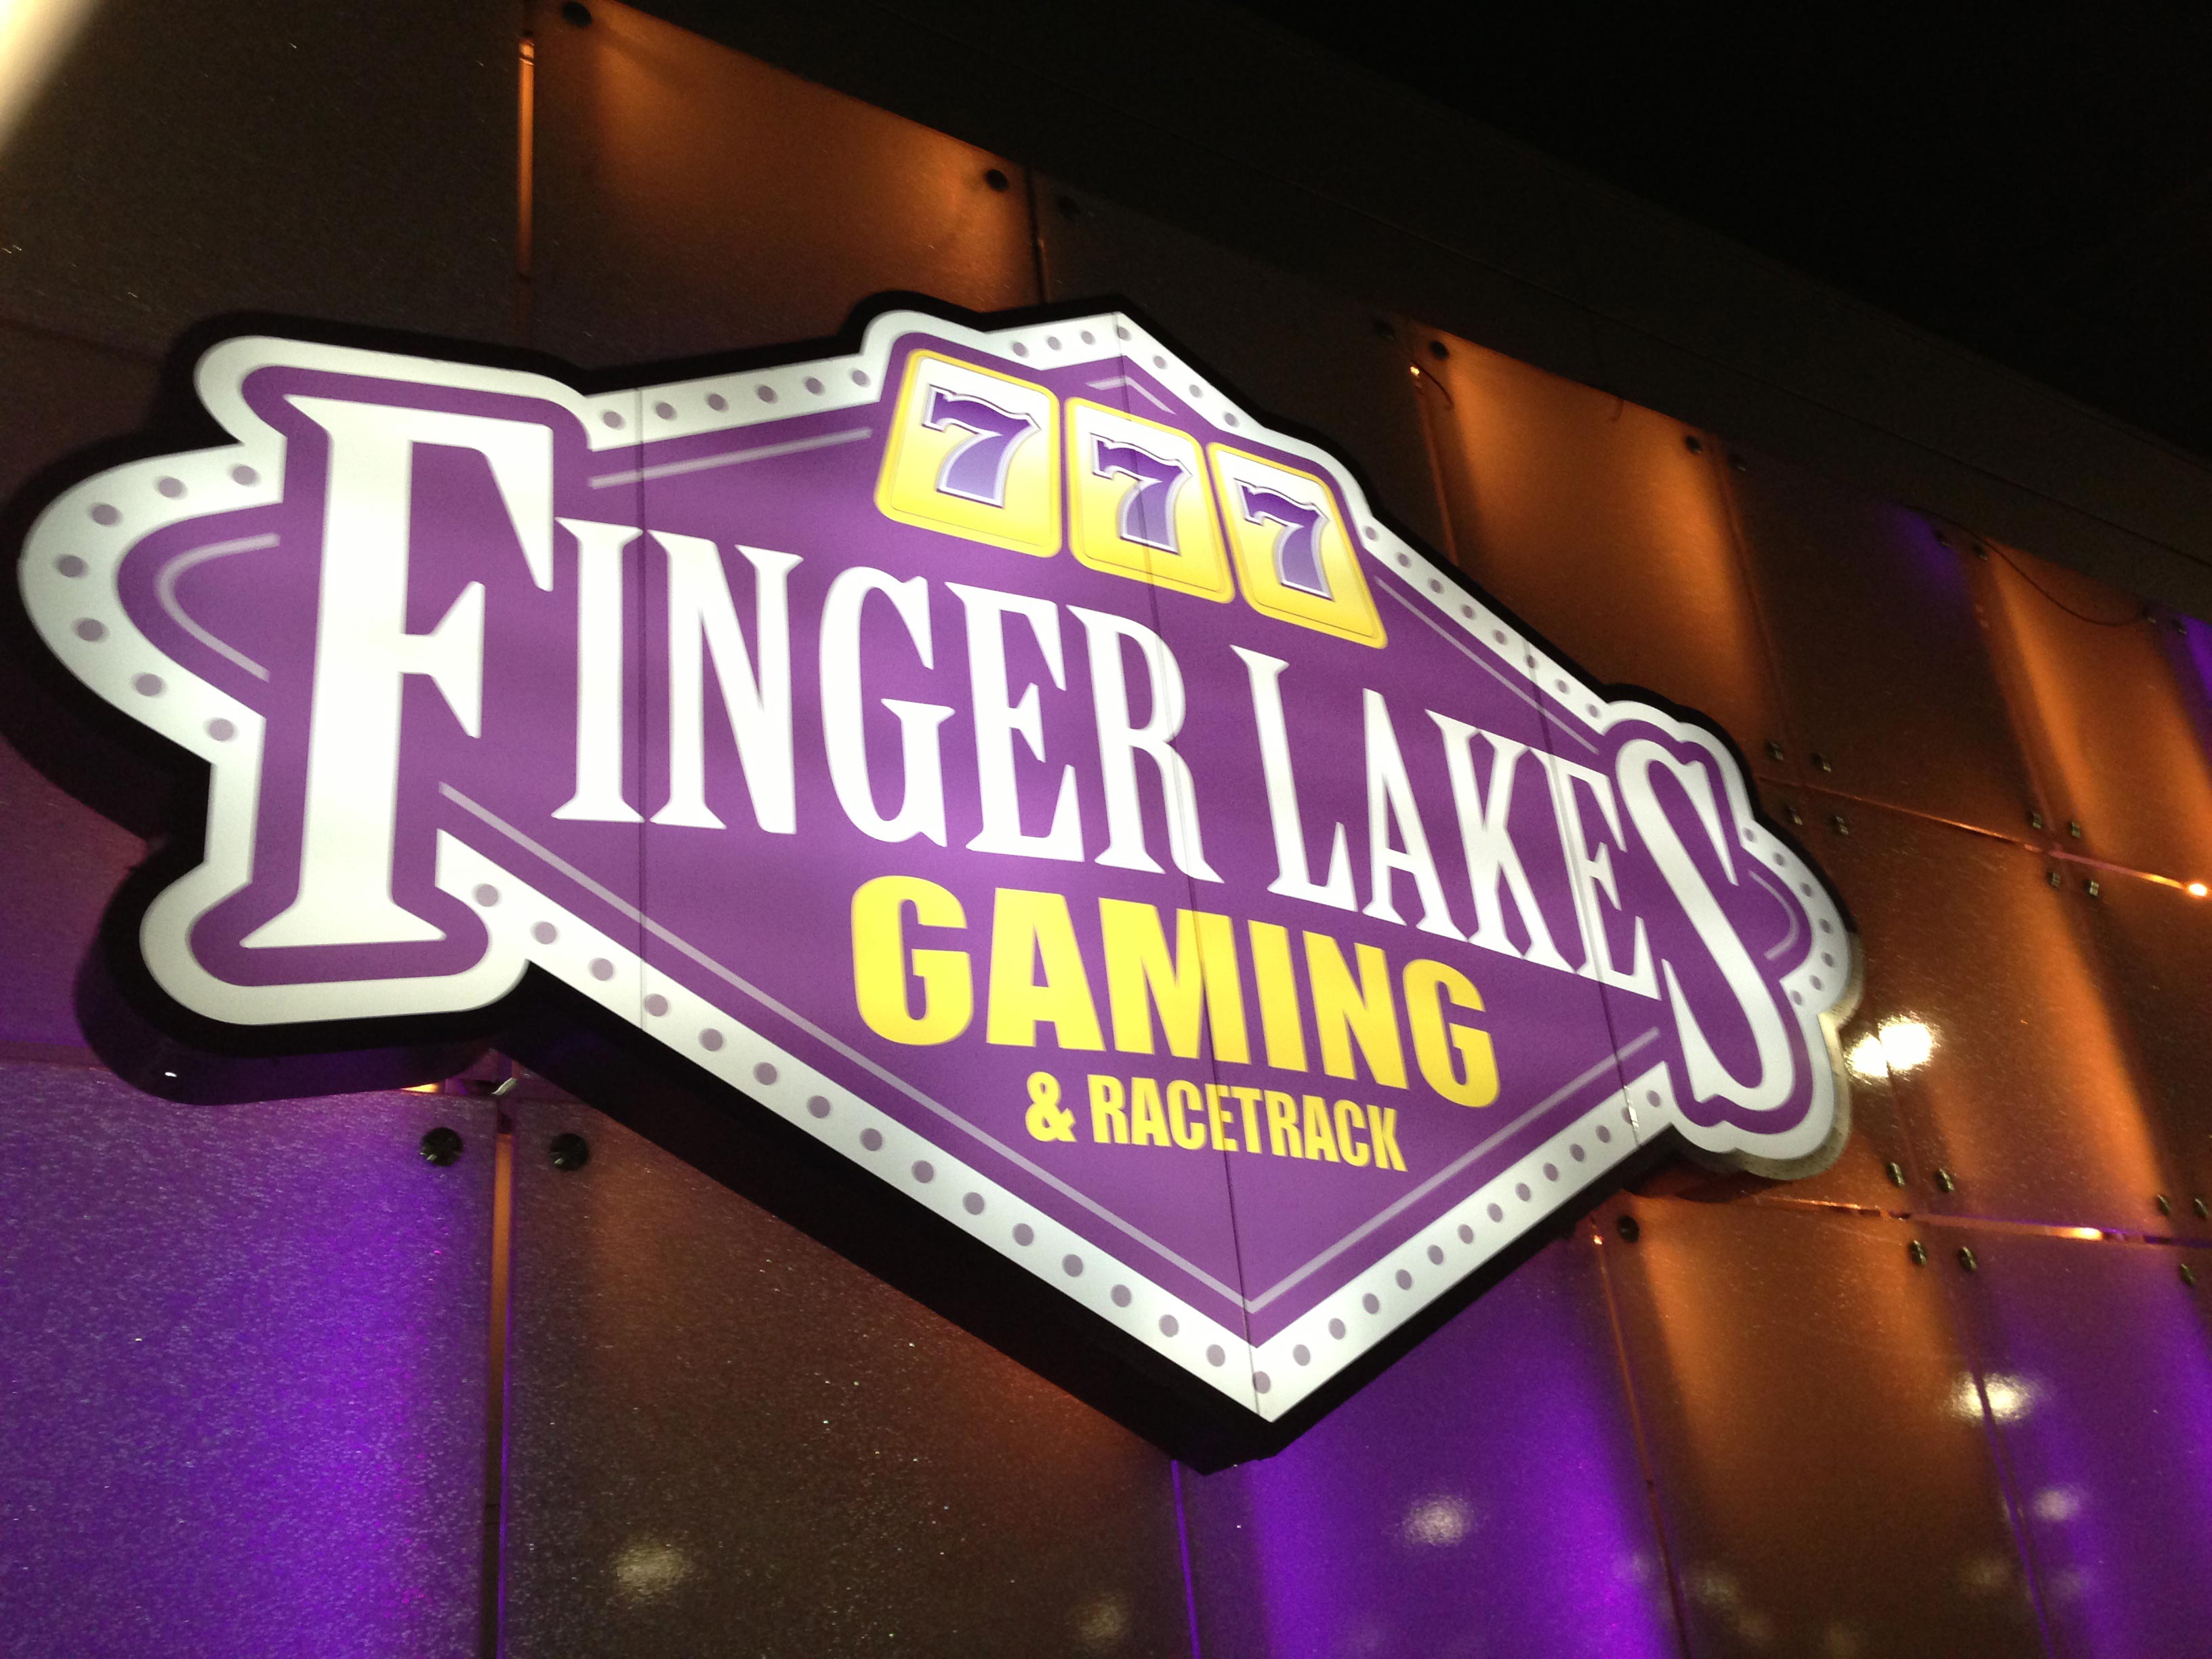 give away finger lakes casino2020 calandar